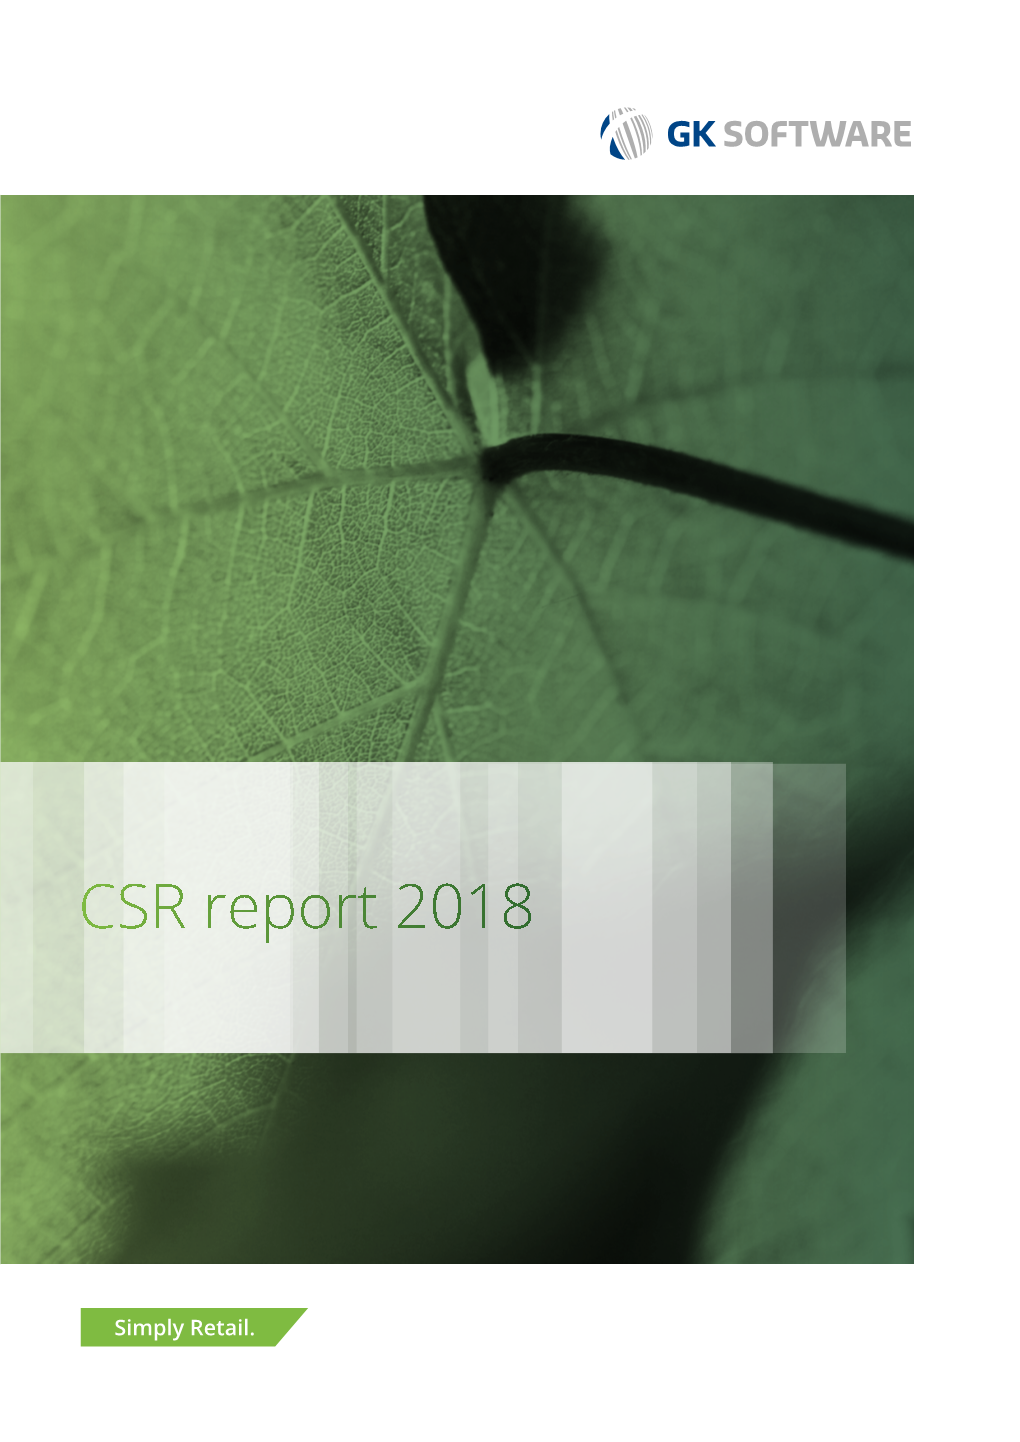 CSR Report 2018 Contents